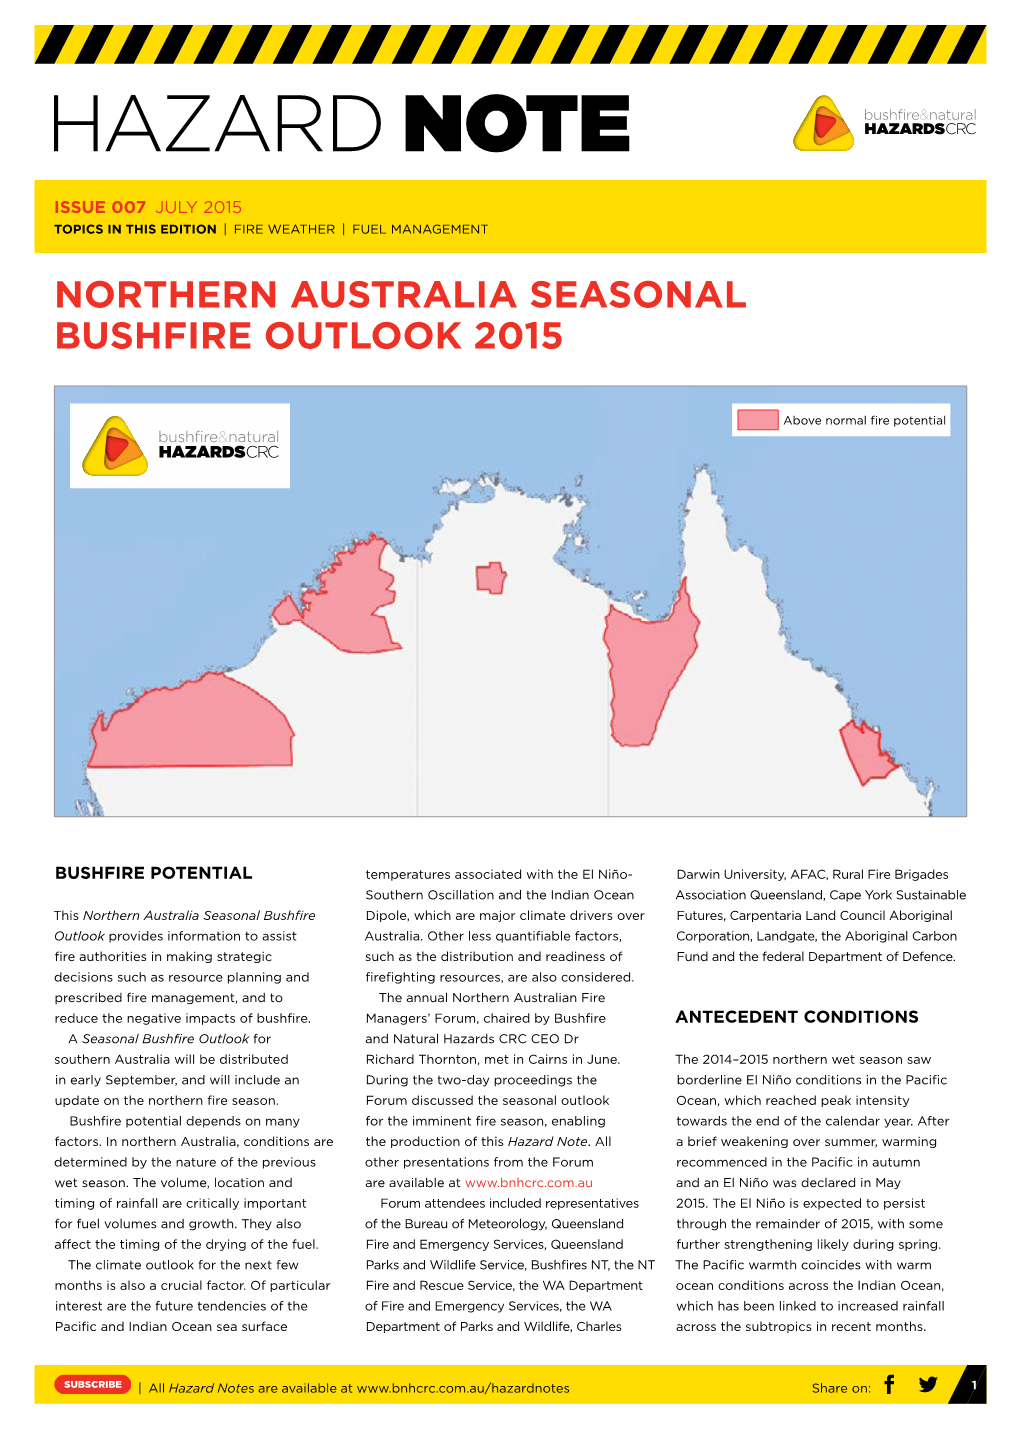 Northern Australia Seasonal Bushfire Outlook 2015